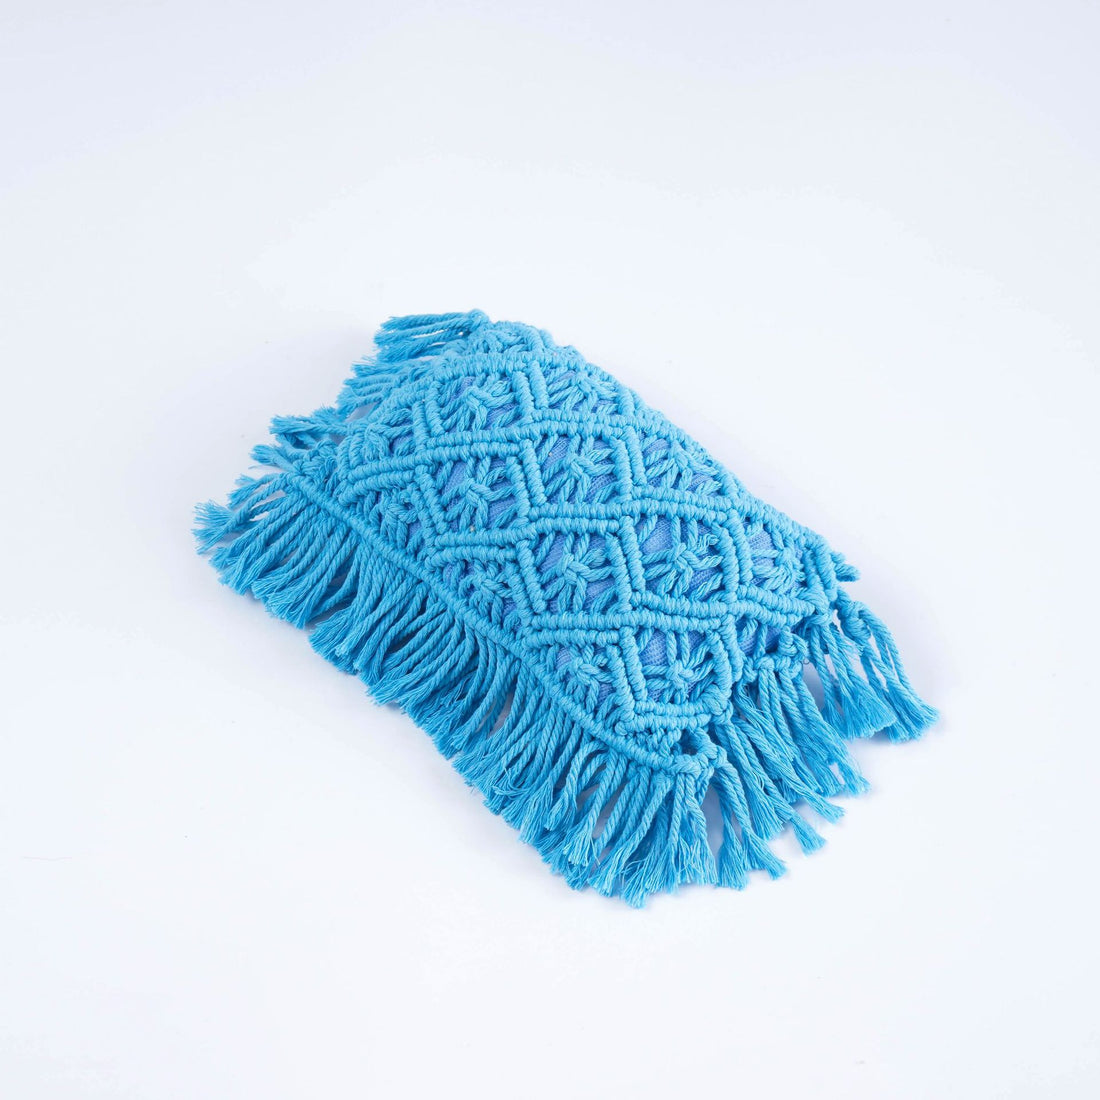 Avezano Hand-woven Tassel Pillow Colorful Cotton Thread Newborn Photography Props